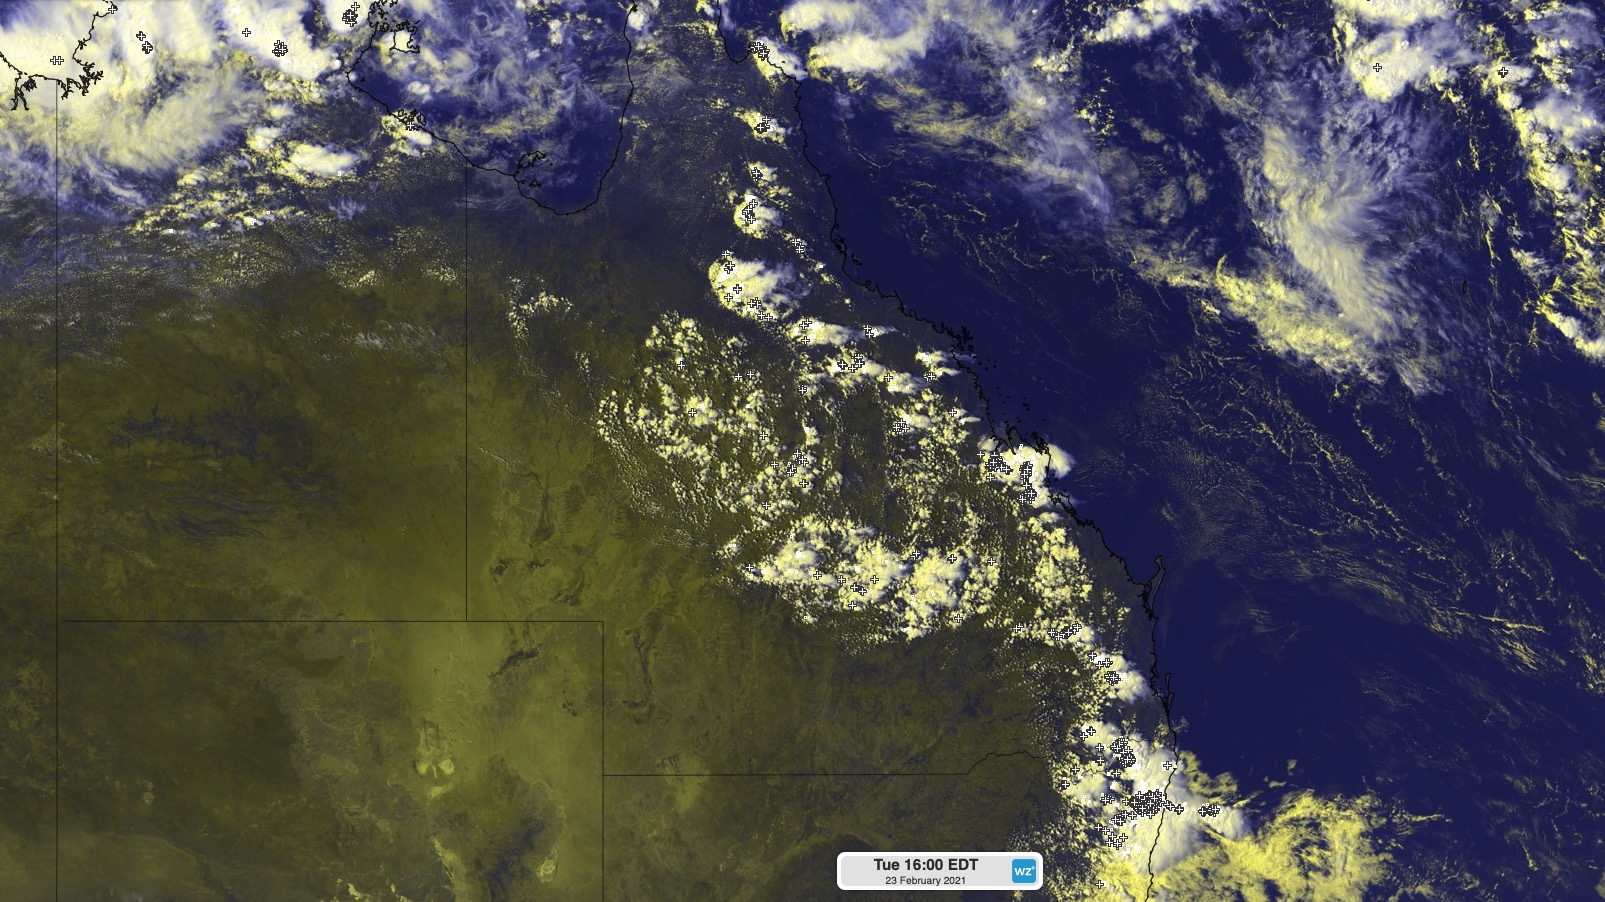 Severe storms striking eastern Australia